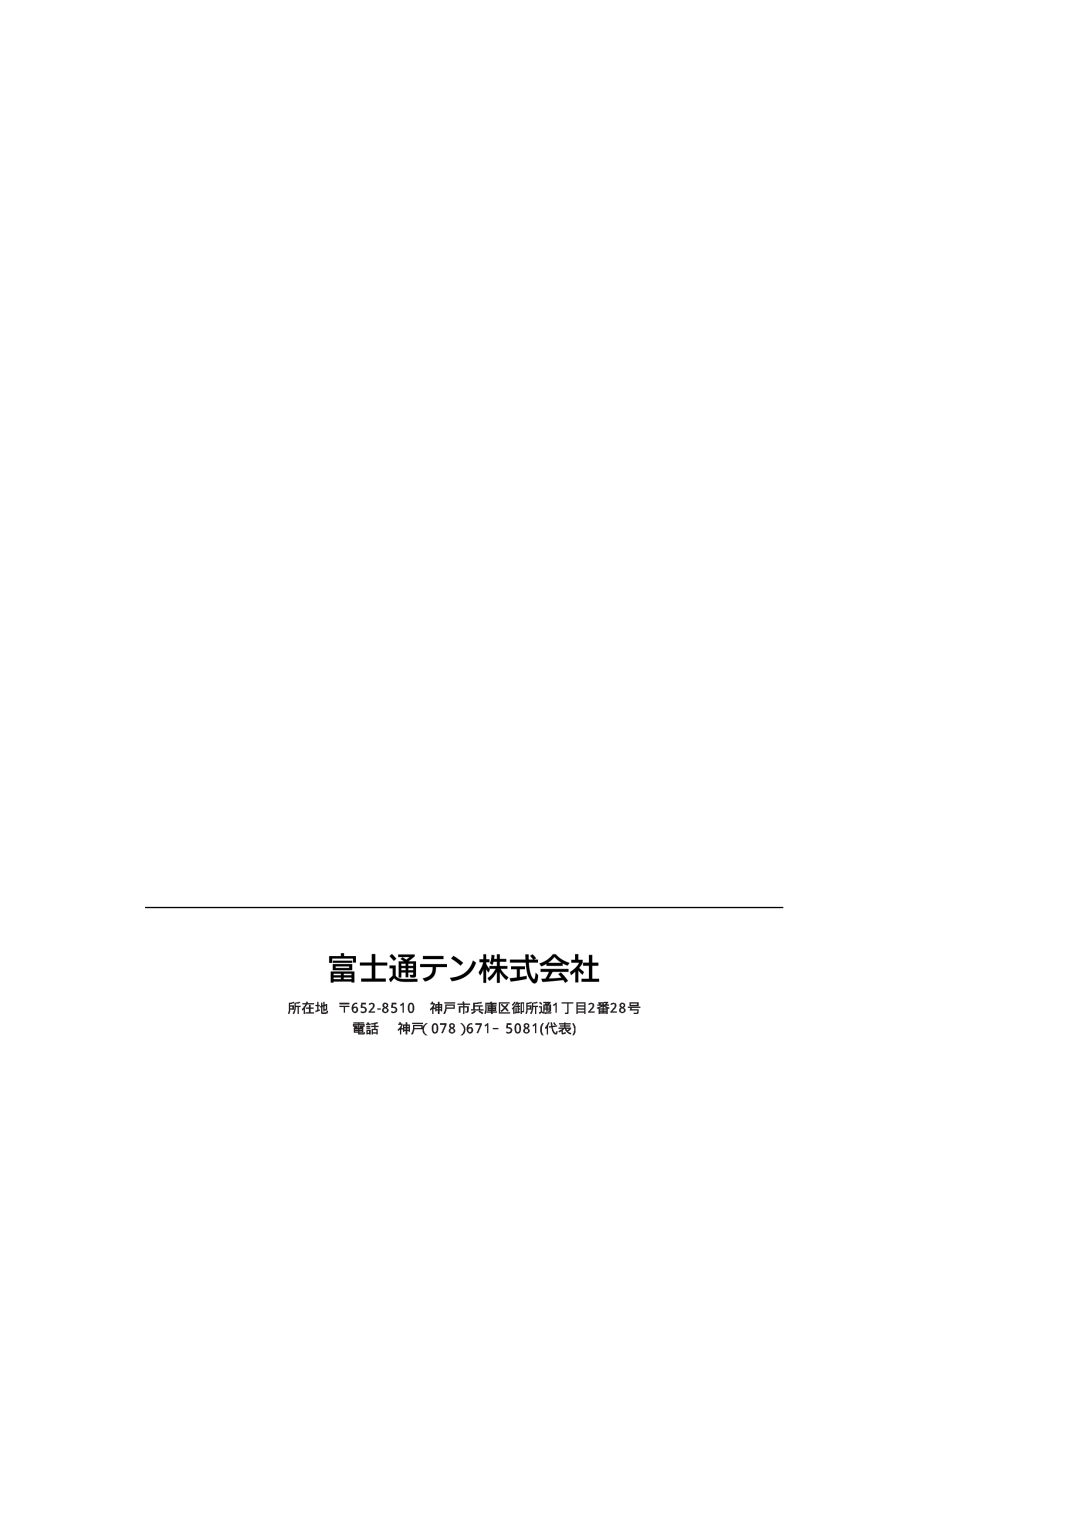 Fujitsu 316SW manual 所在地 652-8510 神戸市兵庫区御所通1丁目2番28号, 電話 神戸（078）671－5081代表 